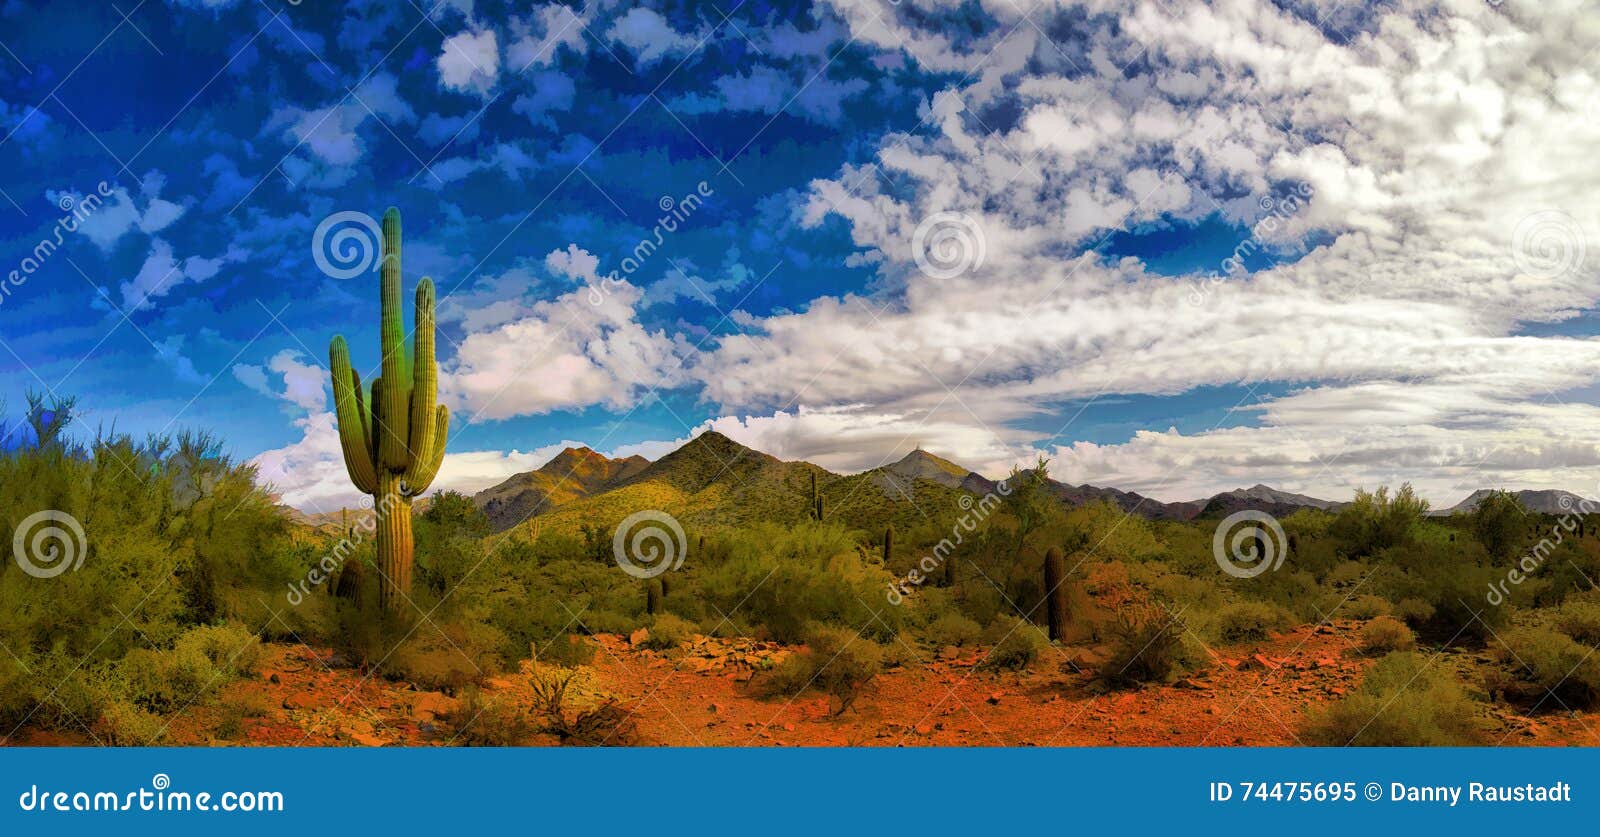 arizona desert in the springtime